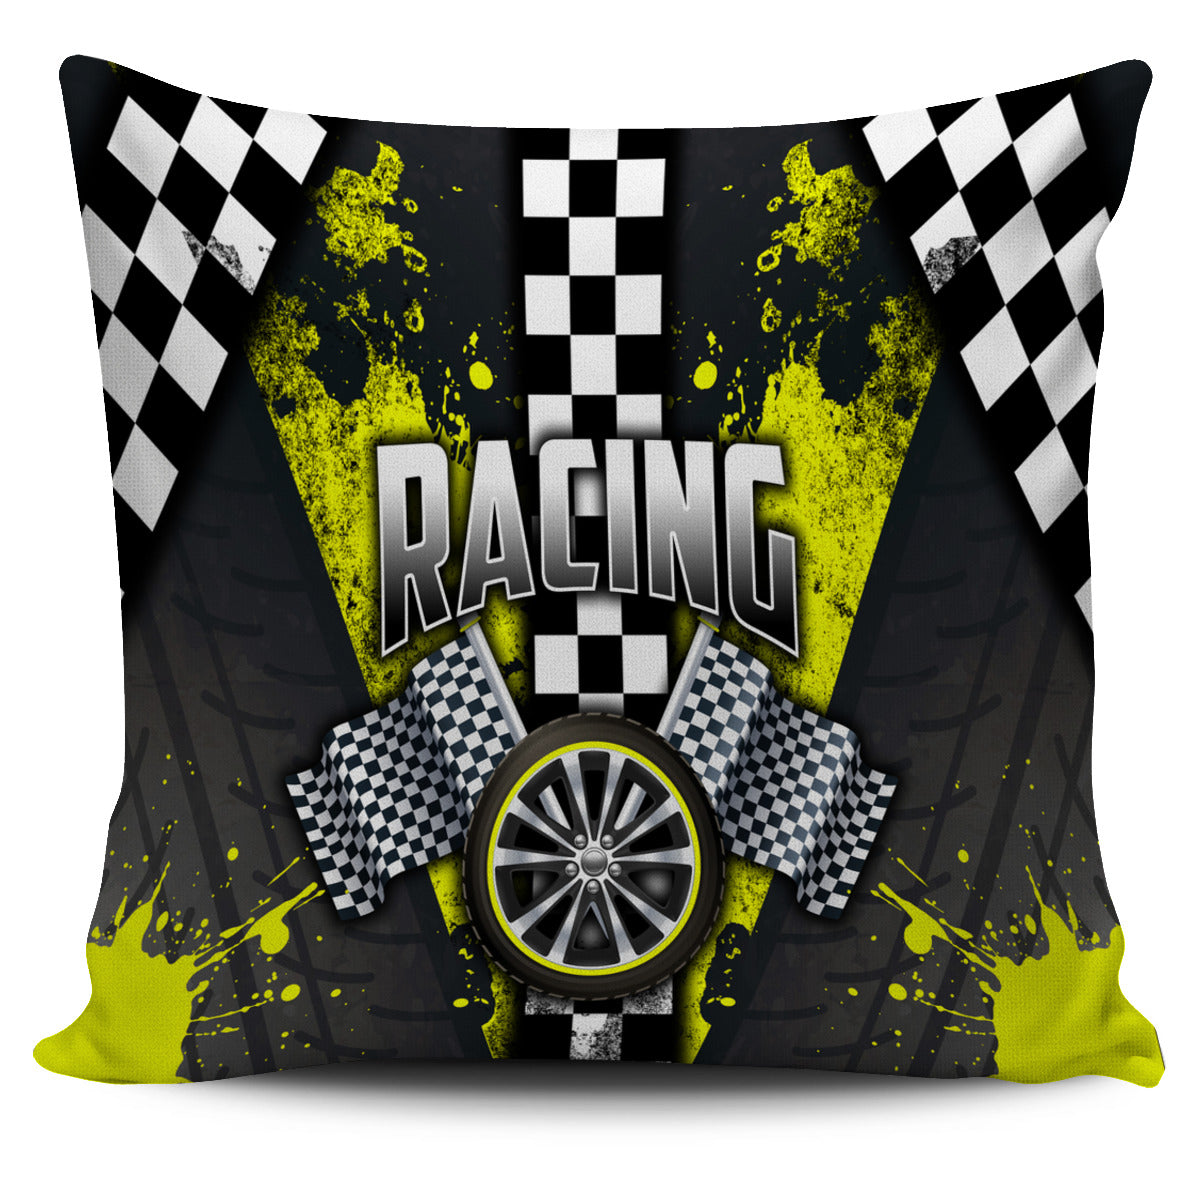 Racing Pillow Cover Yellow